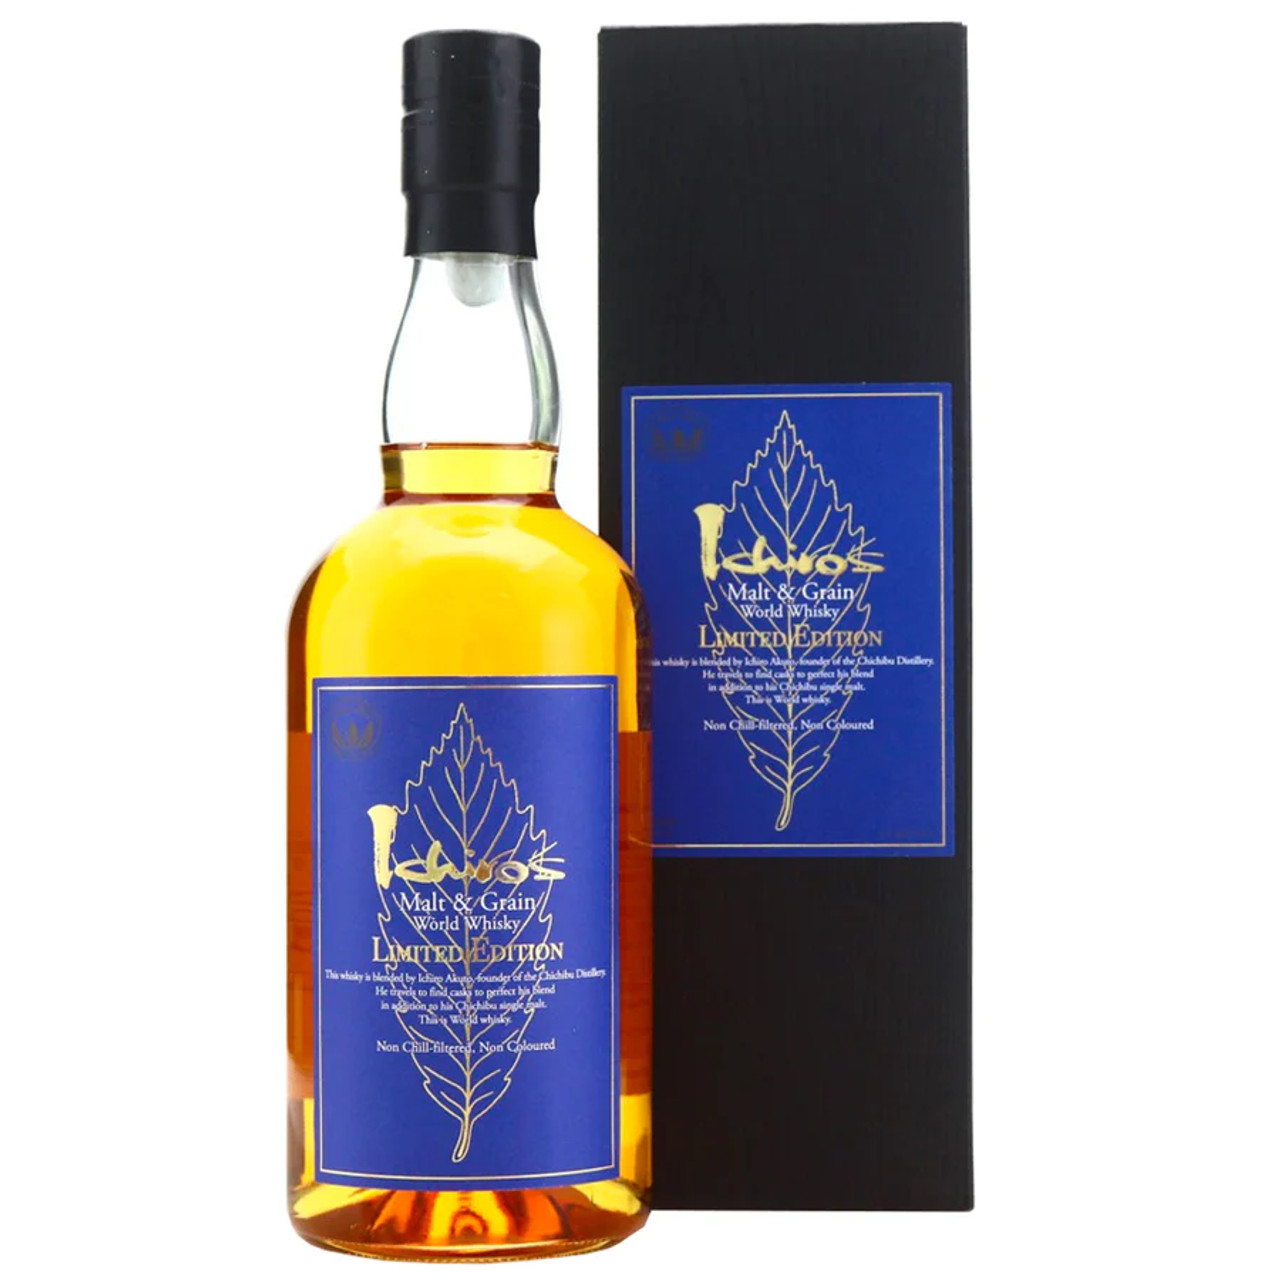 Ichiros Malt and Grain World Whisky, Limited Edition